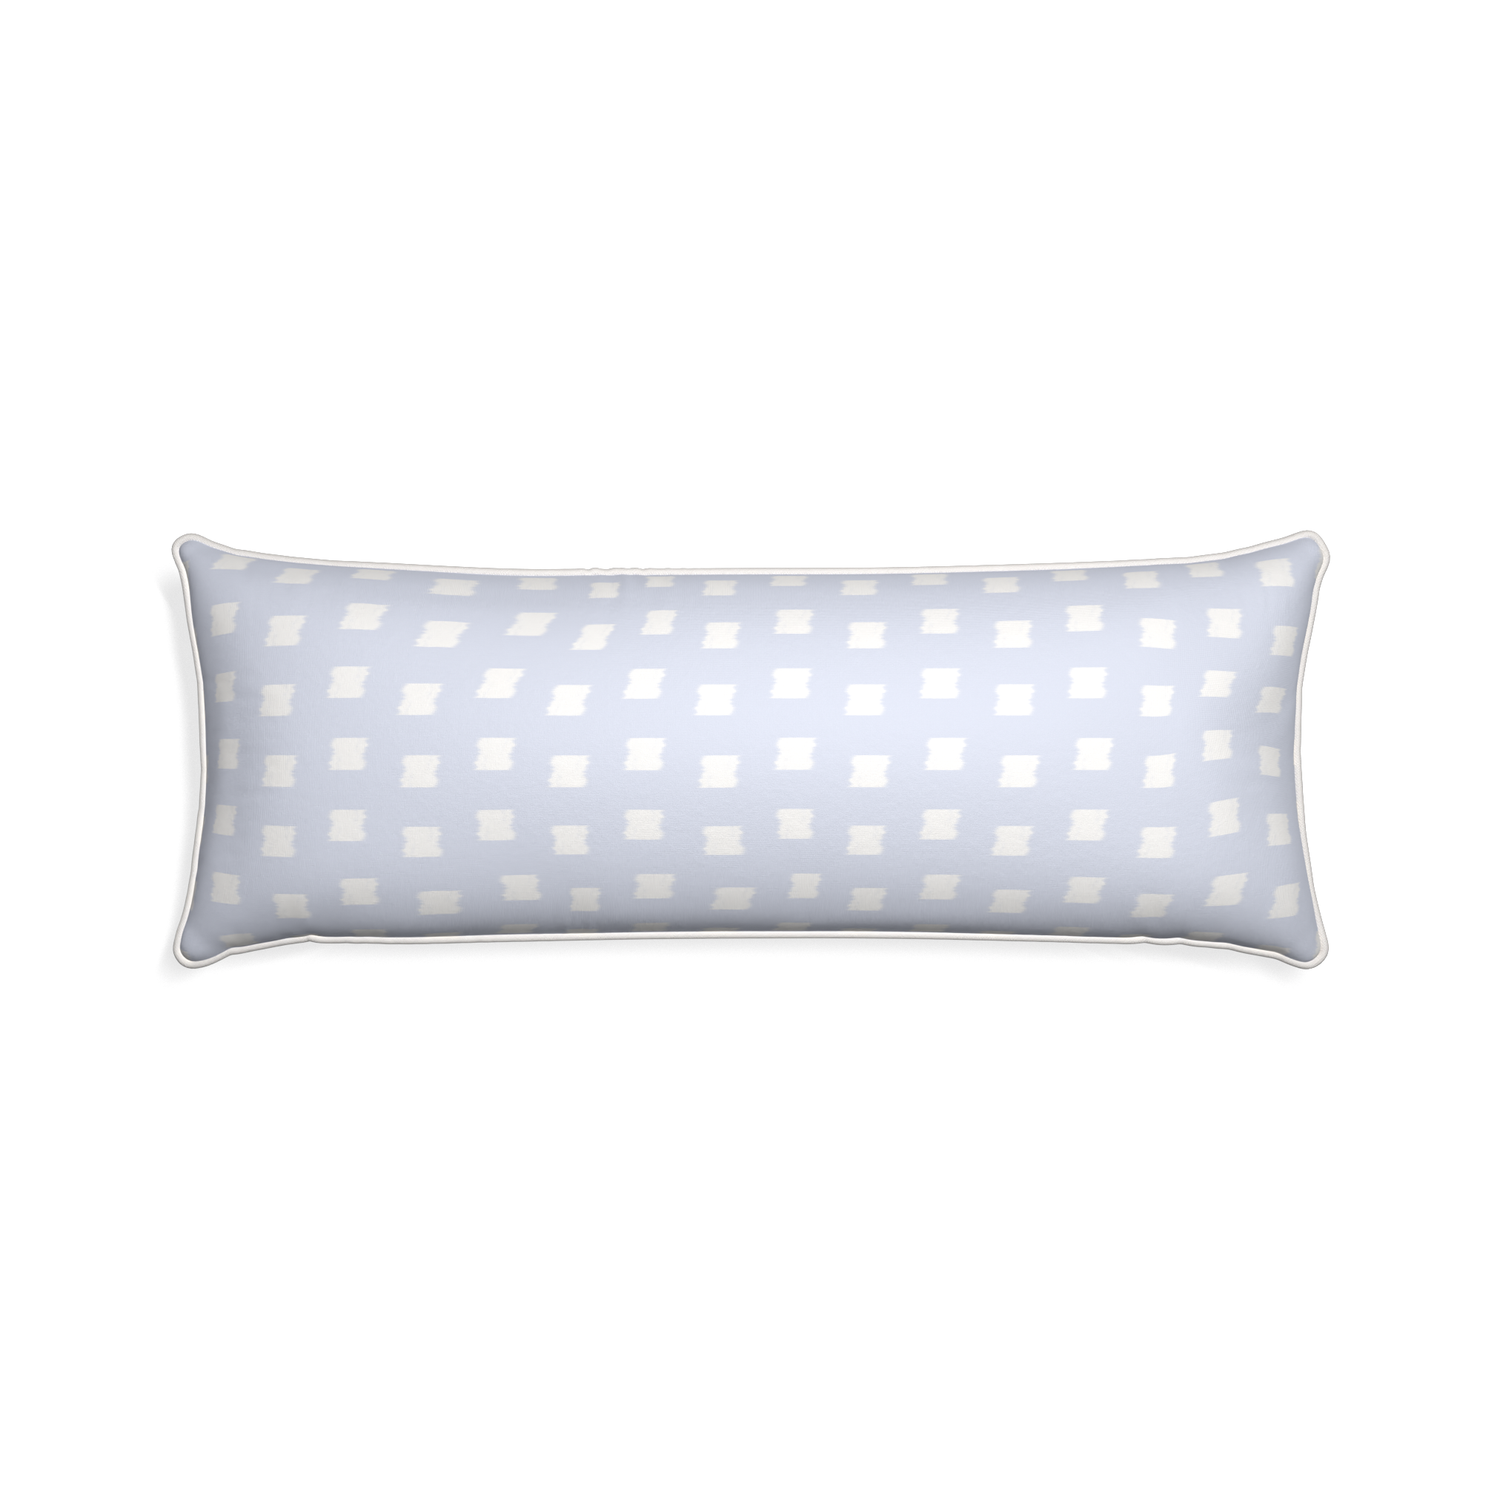 Xl-lumbar denton custom pillow with snow piping on white background